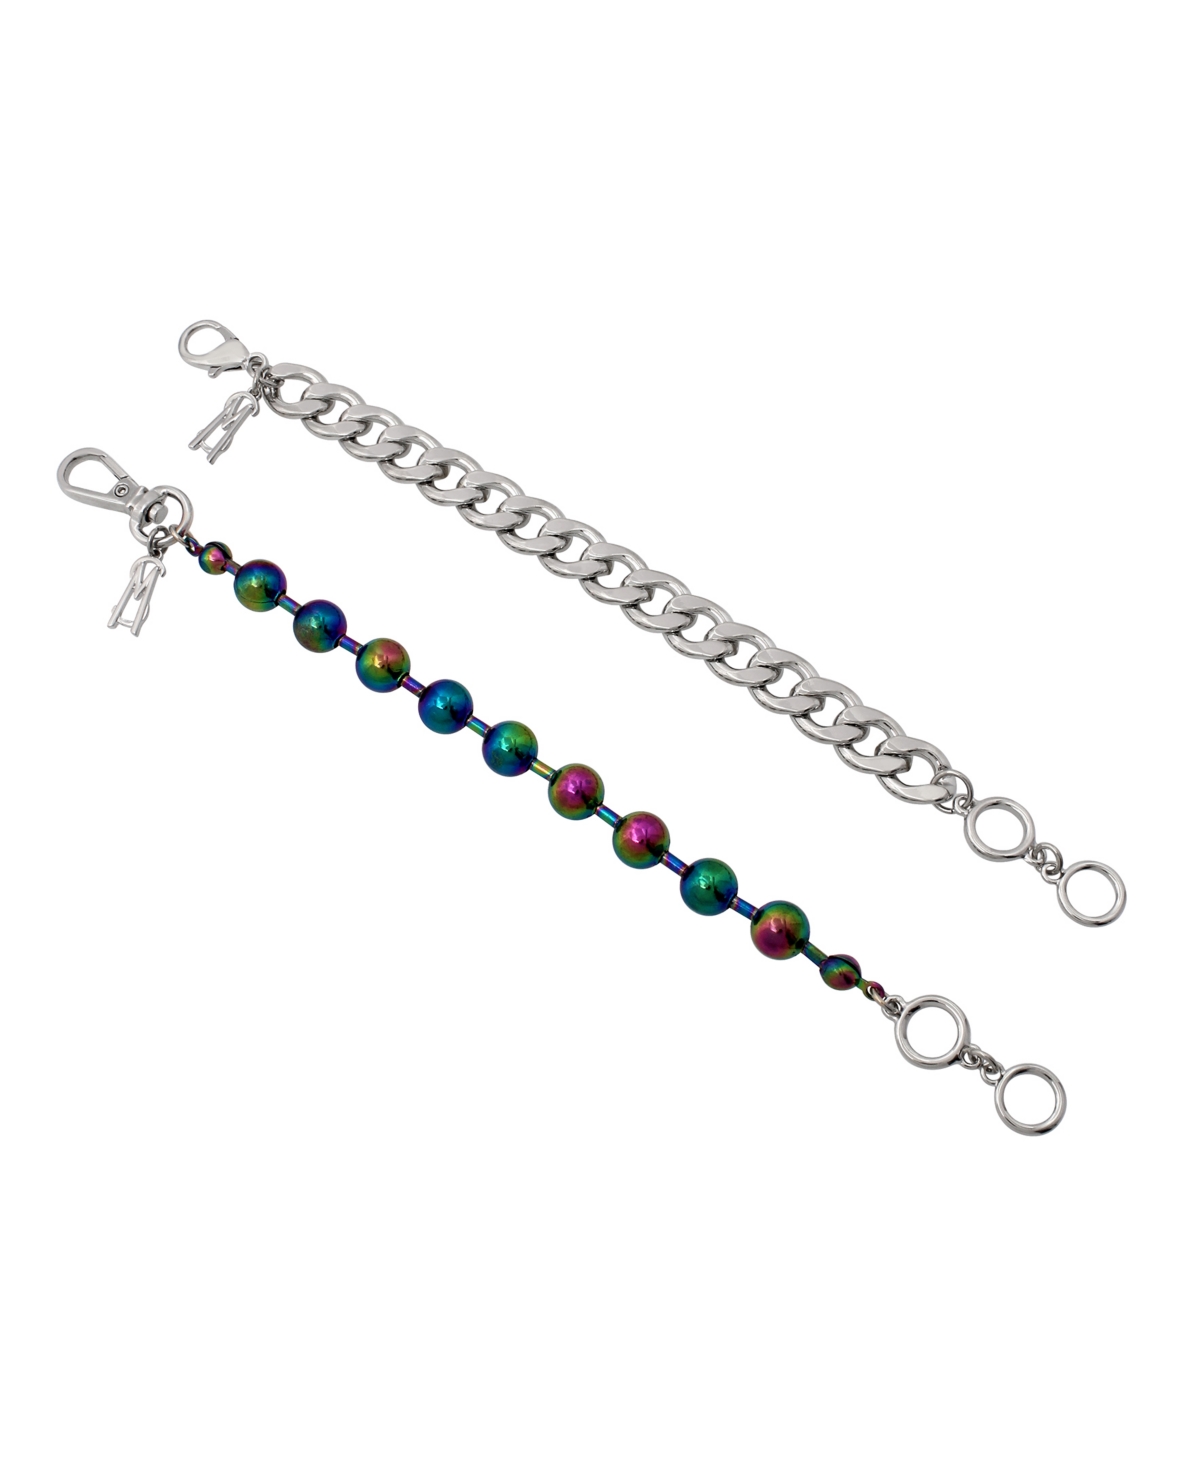 Steve Madden Ball Chain And Curb Chain Bracelet Set In Oil Slick